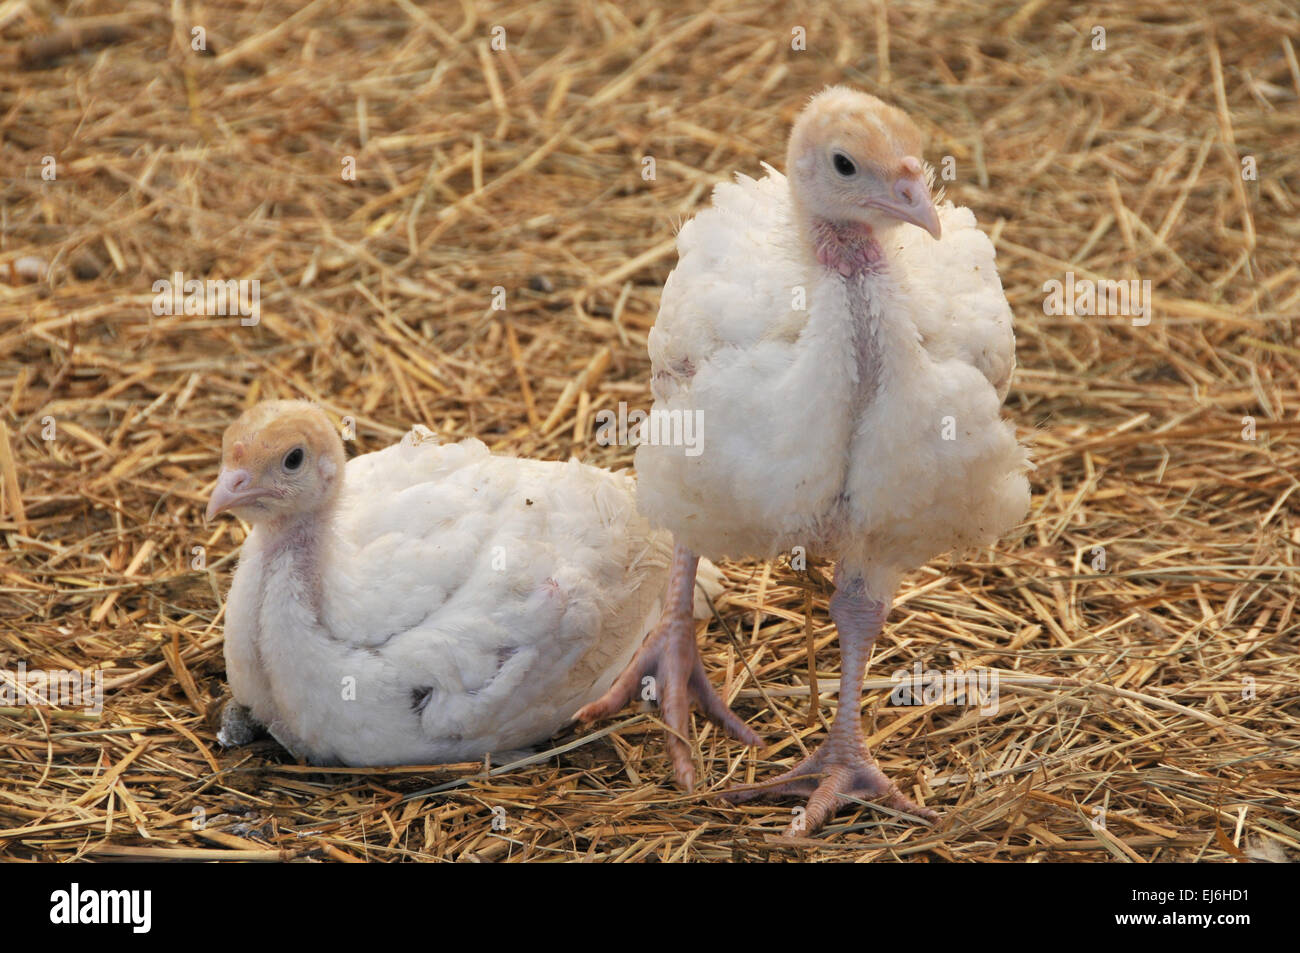 Two young turkeys on straw in farm Stock Photo - Alamy